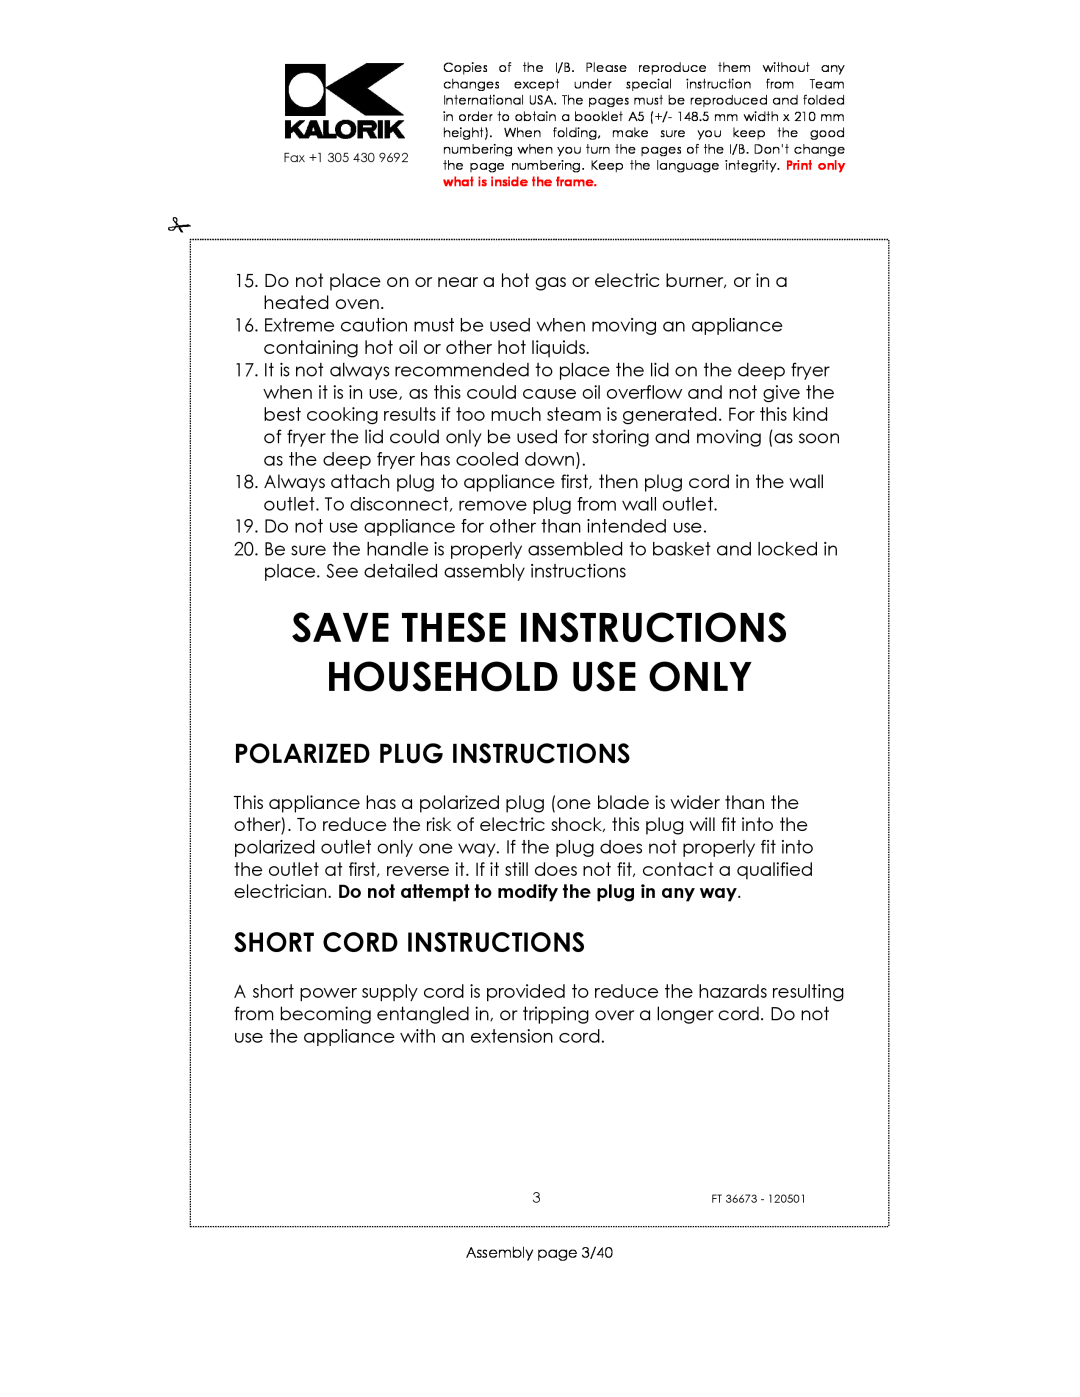 Kalorik USK FT 36673 Save These Instructions Household Use Only, Polarized Plug Instructions, Short Cord Instructions 